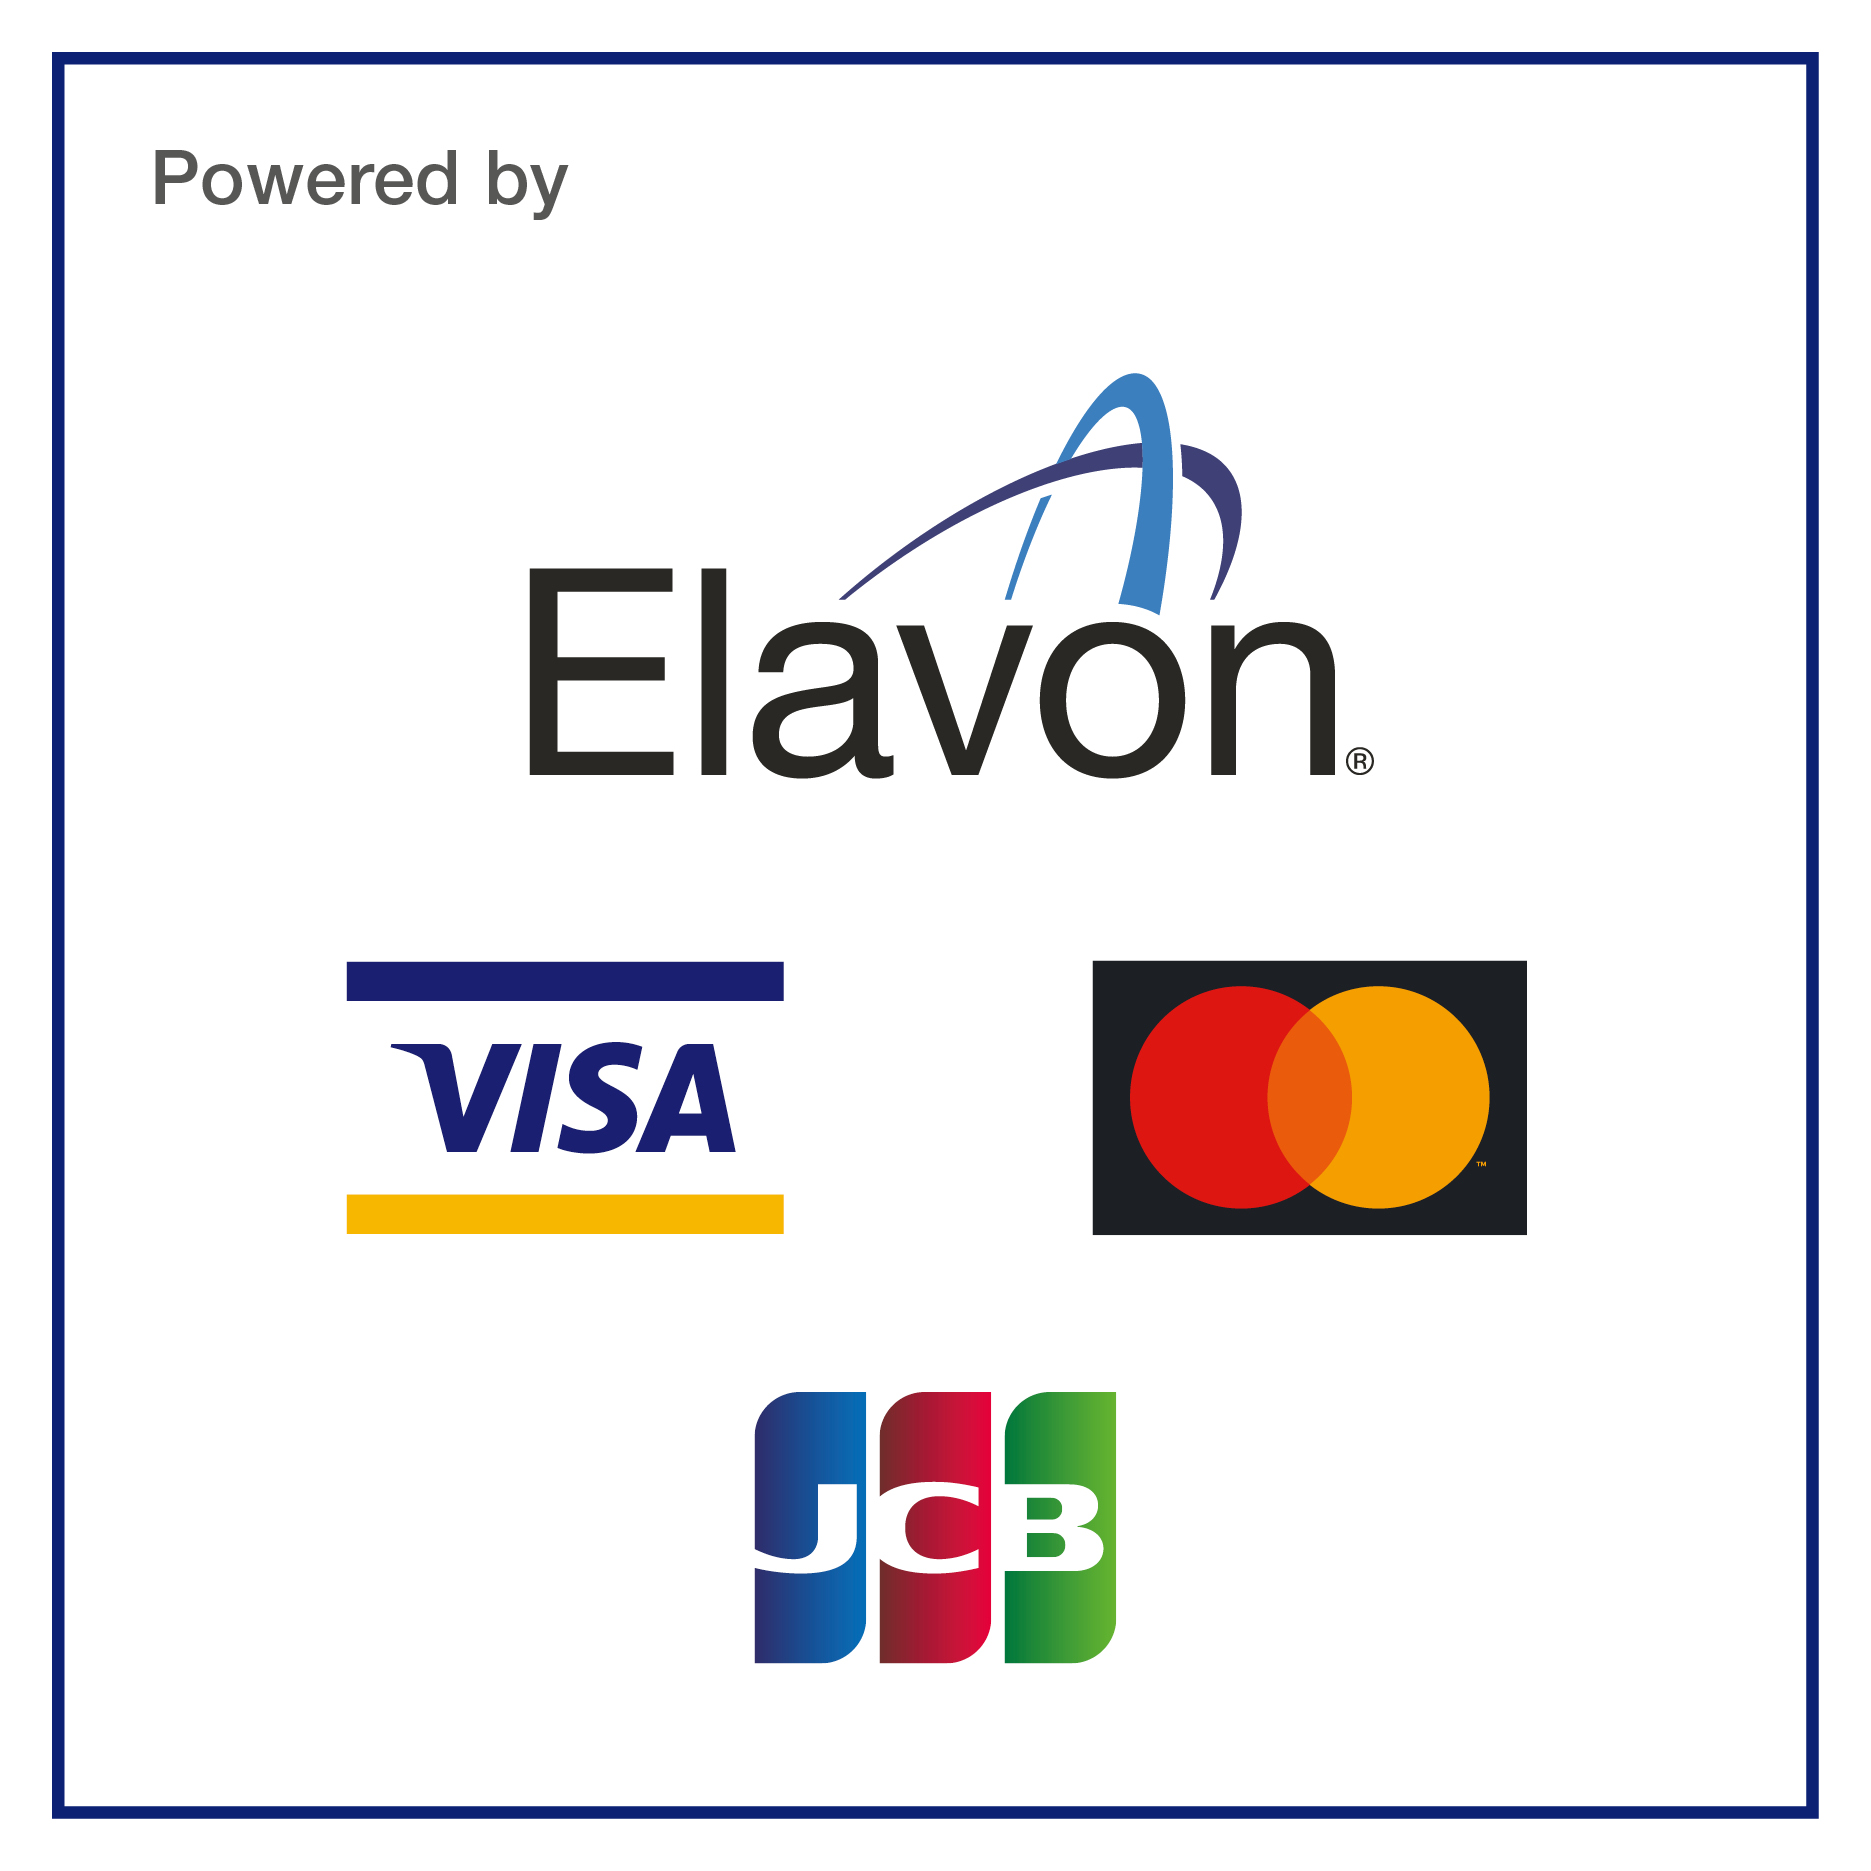 Card scheme logo: Visa, Mastercard, JCB